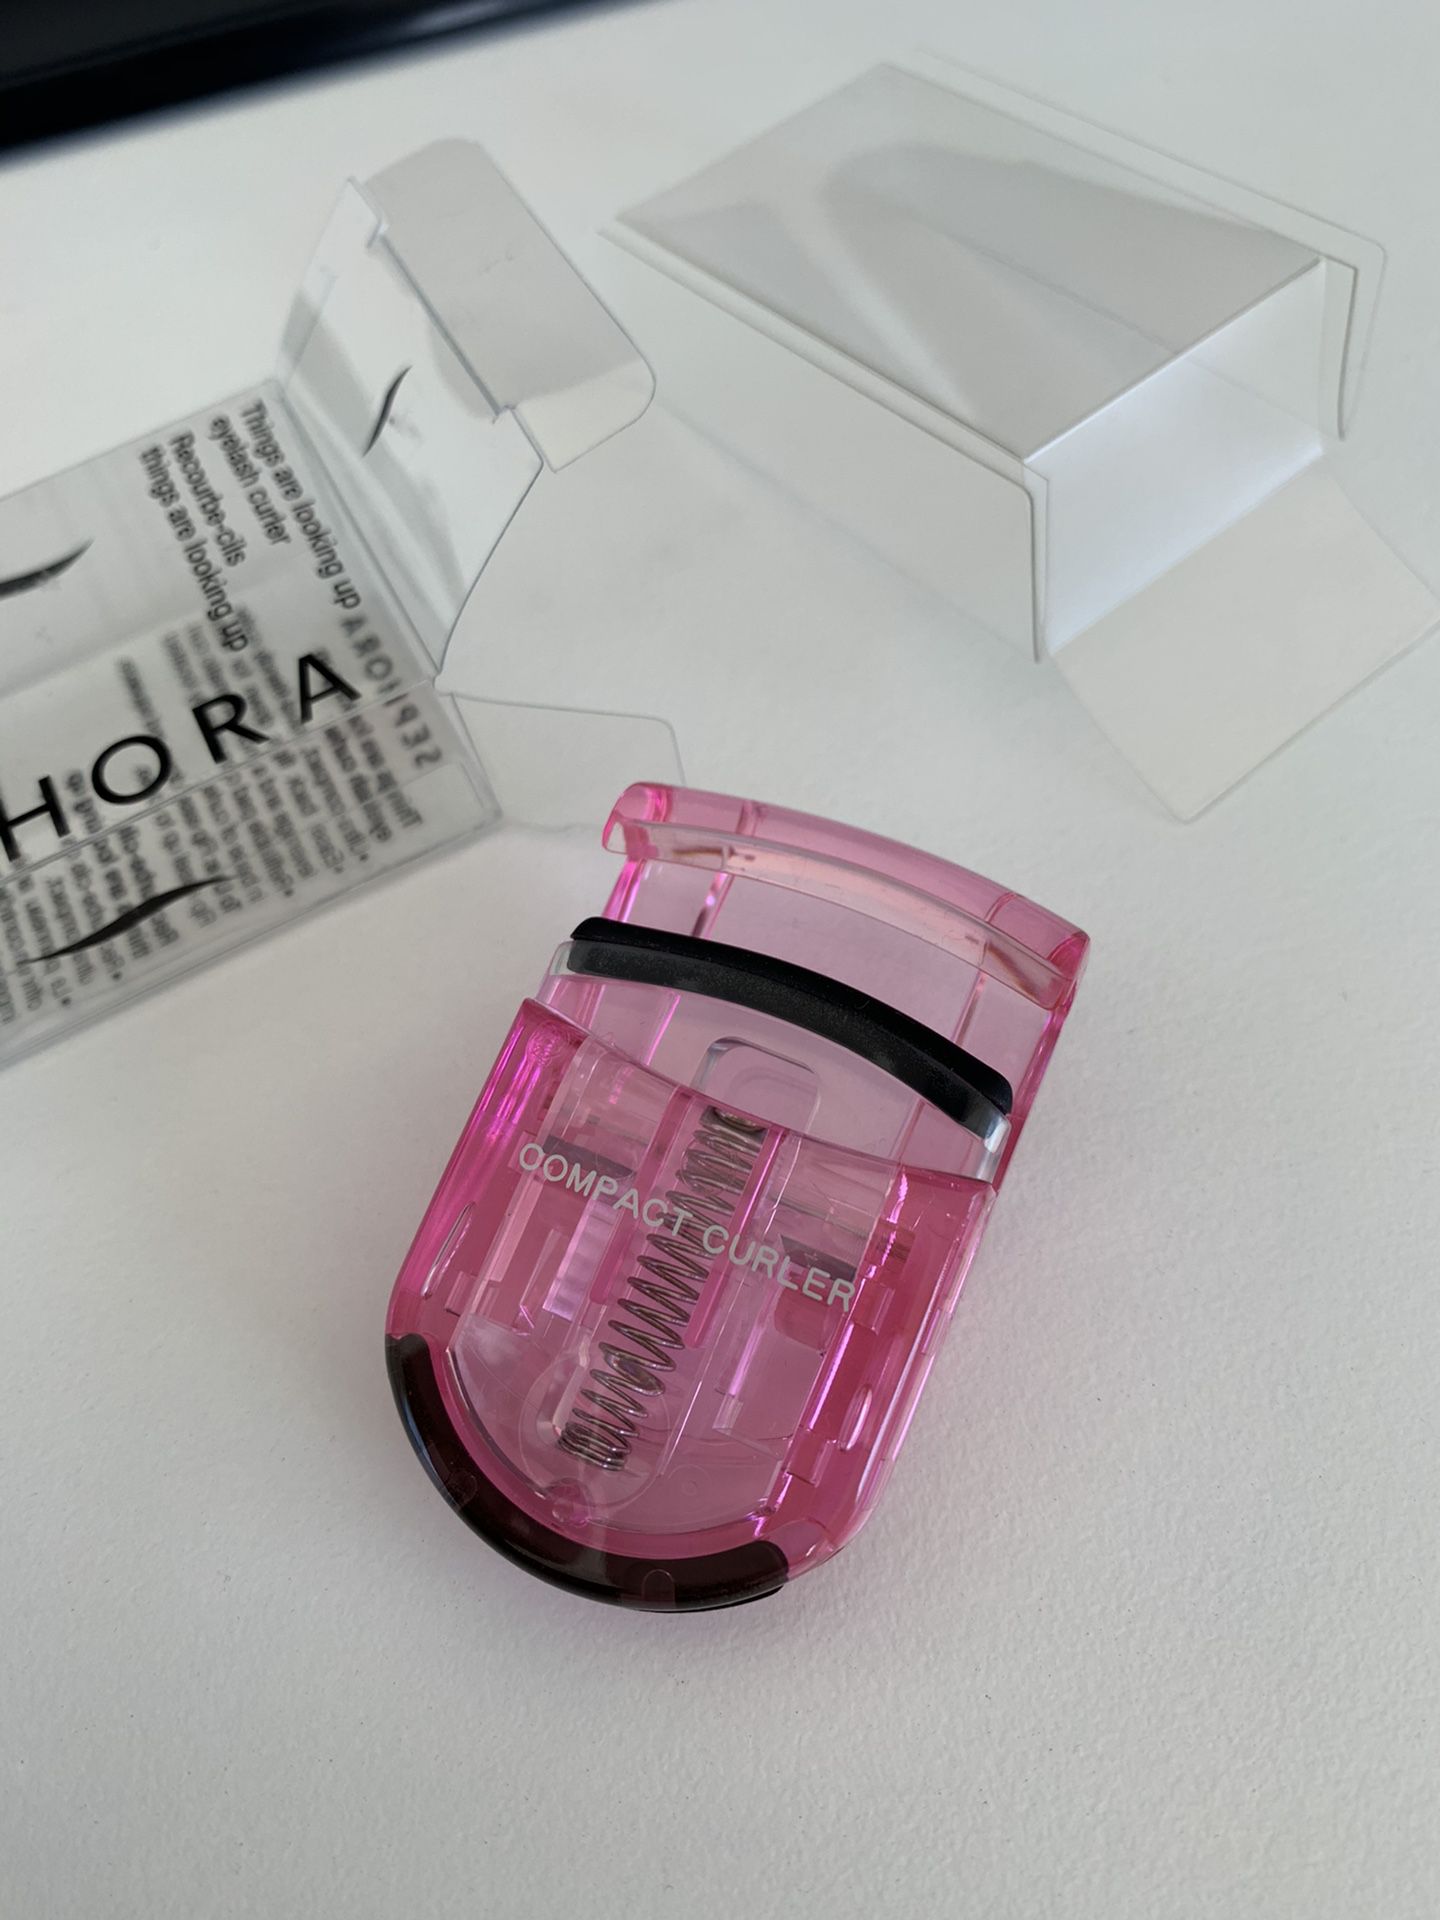 Sephora compact eyelash curler